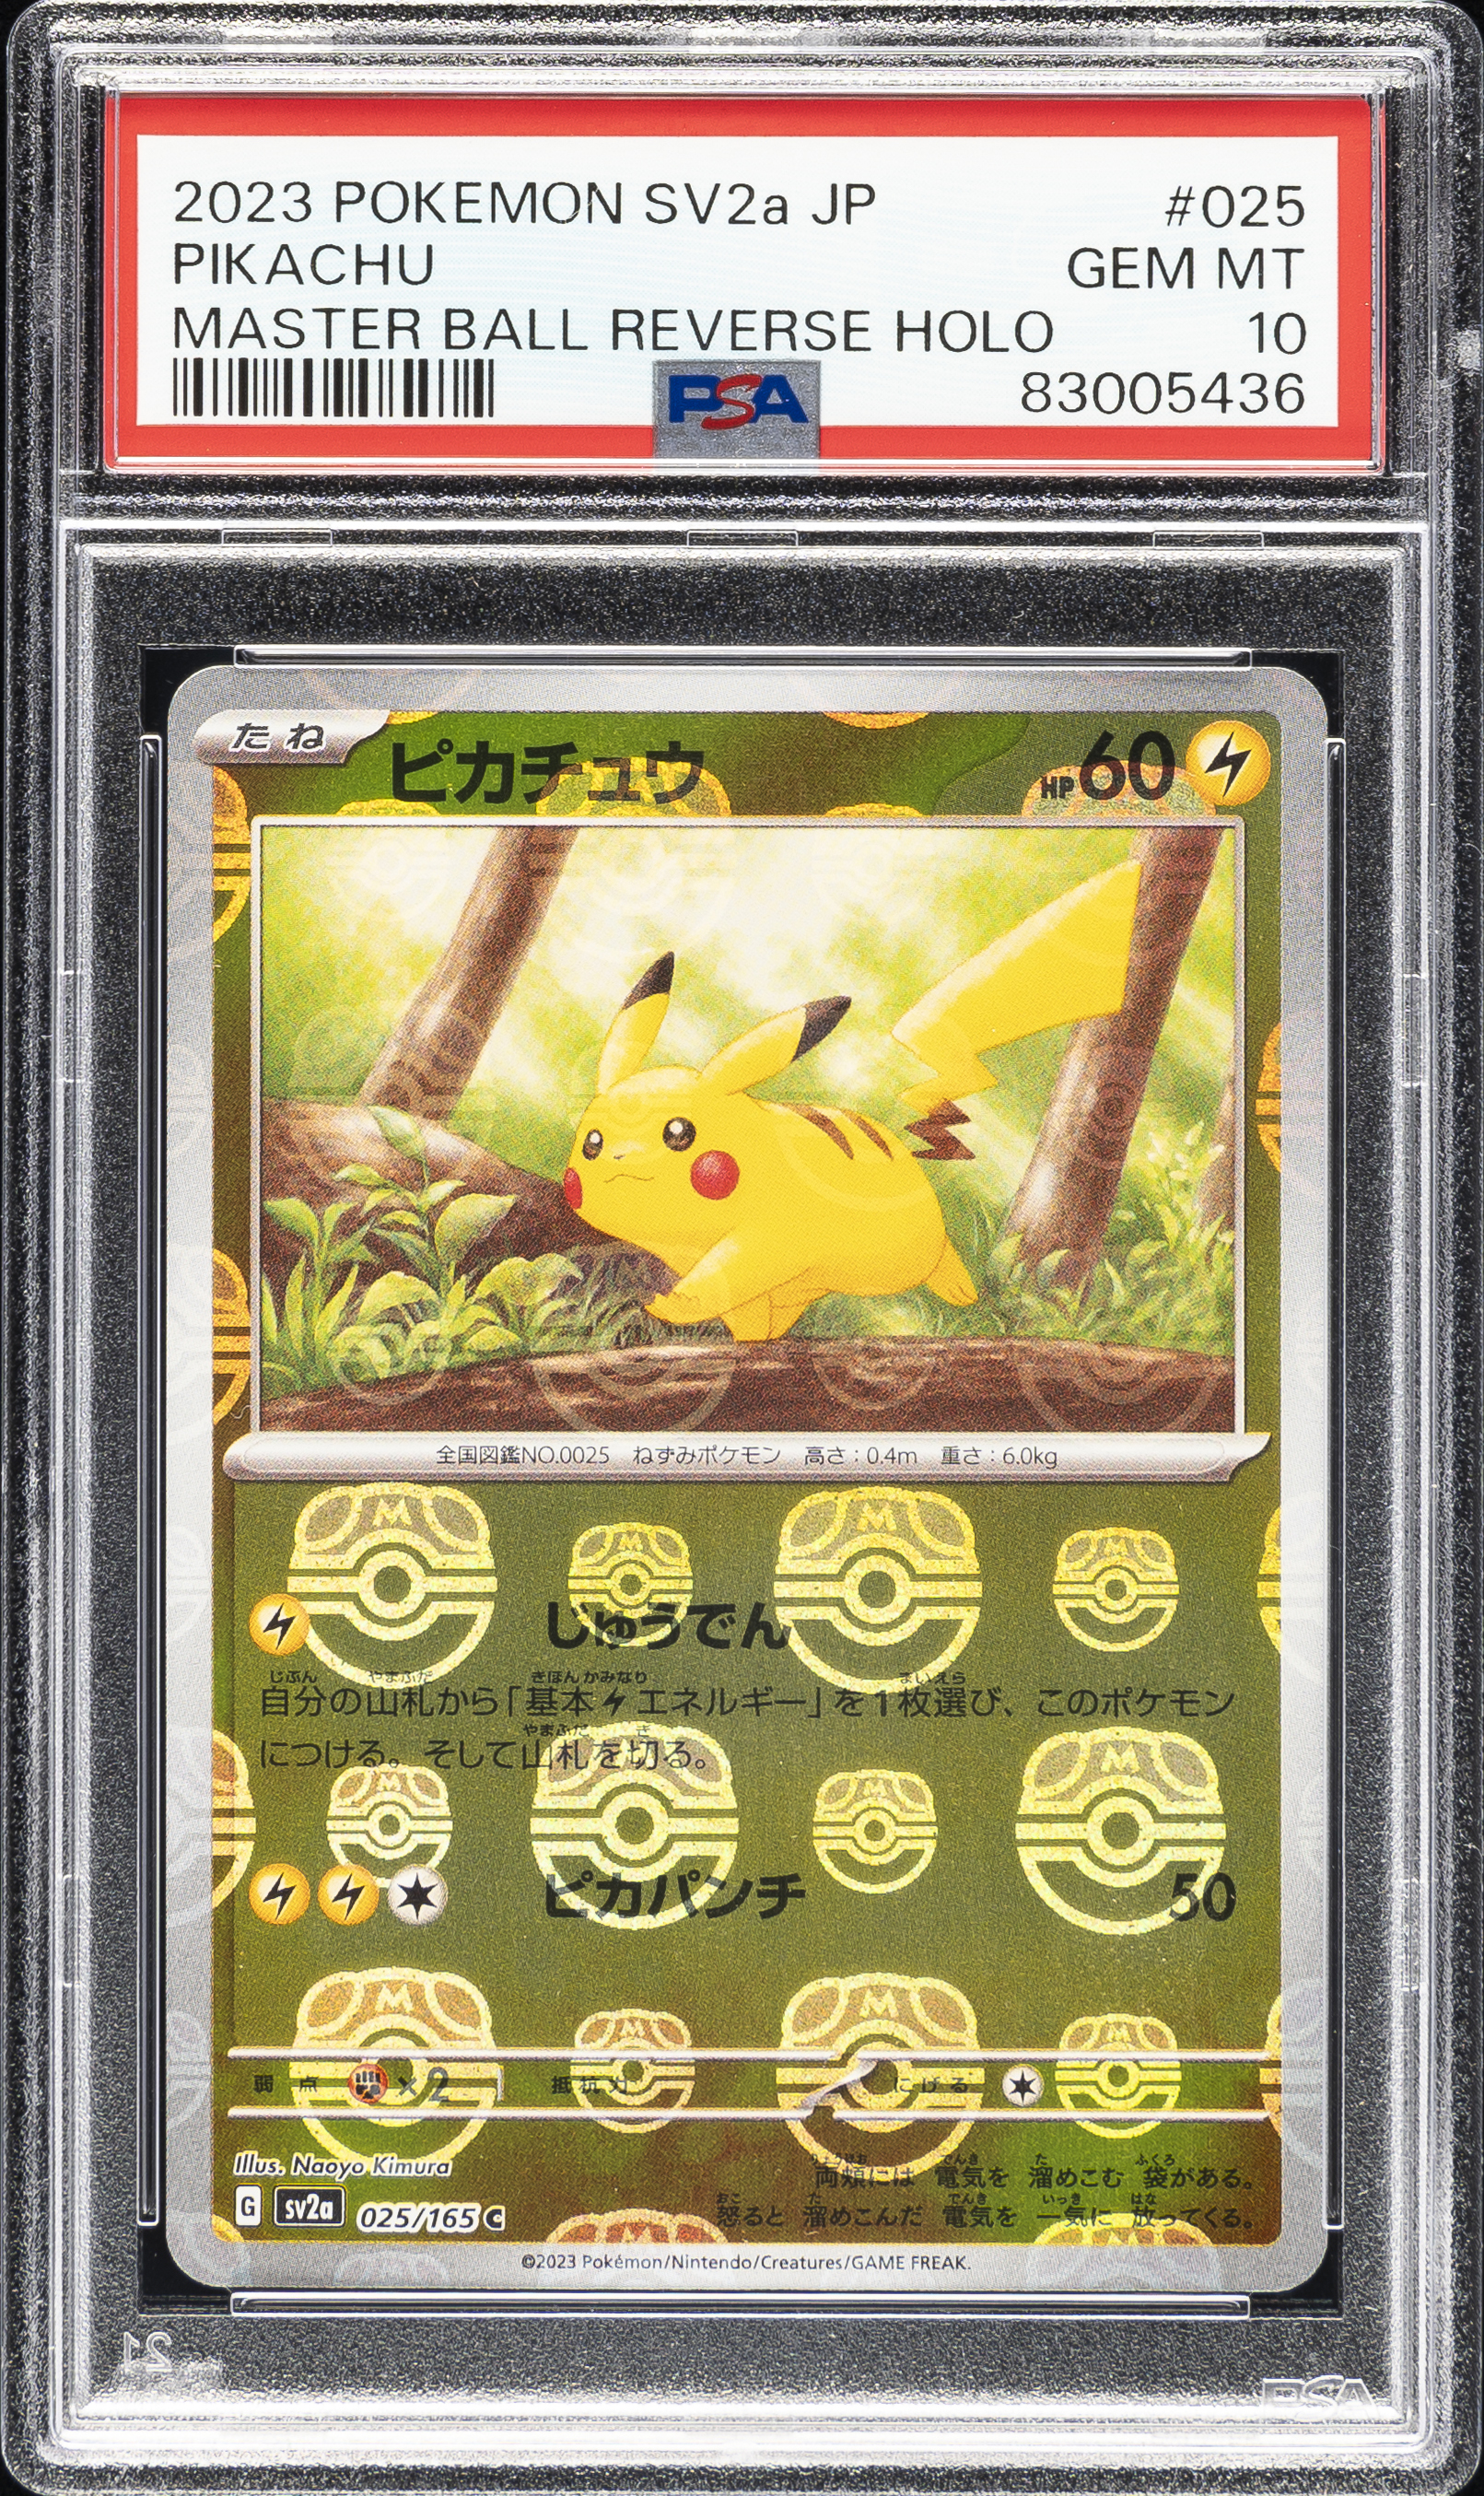 2023 Pokemon Japanese Sv2A-Pokemon 151 Master Ball Reverse Holo #025 Pikachu – PSA GEM MT 10